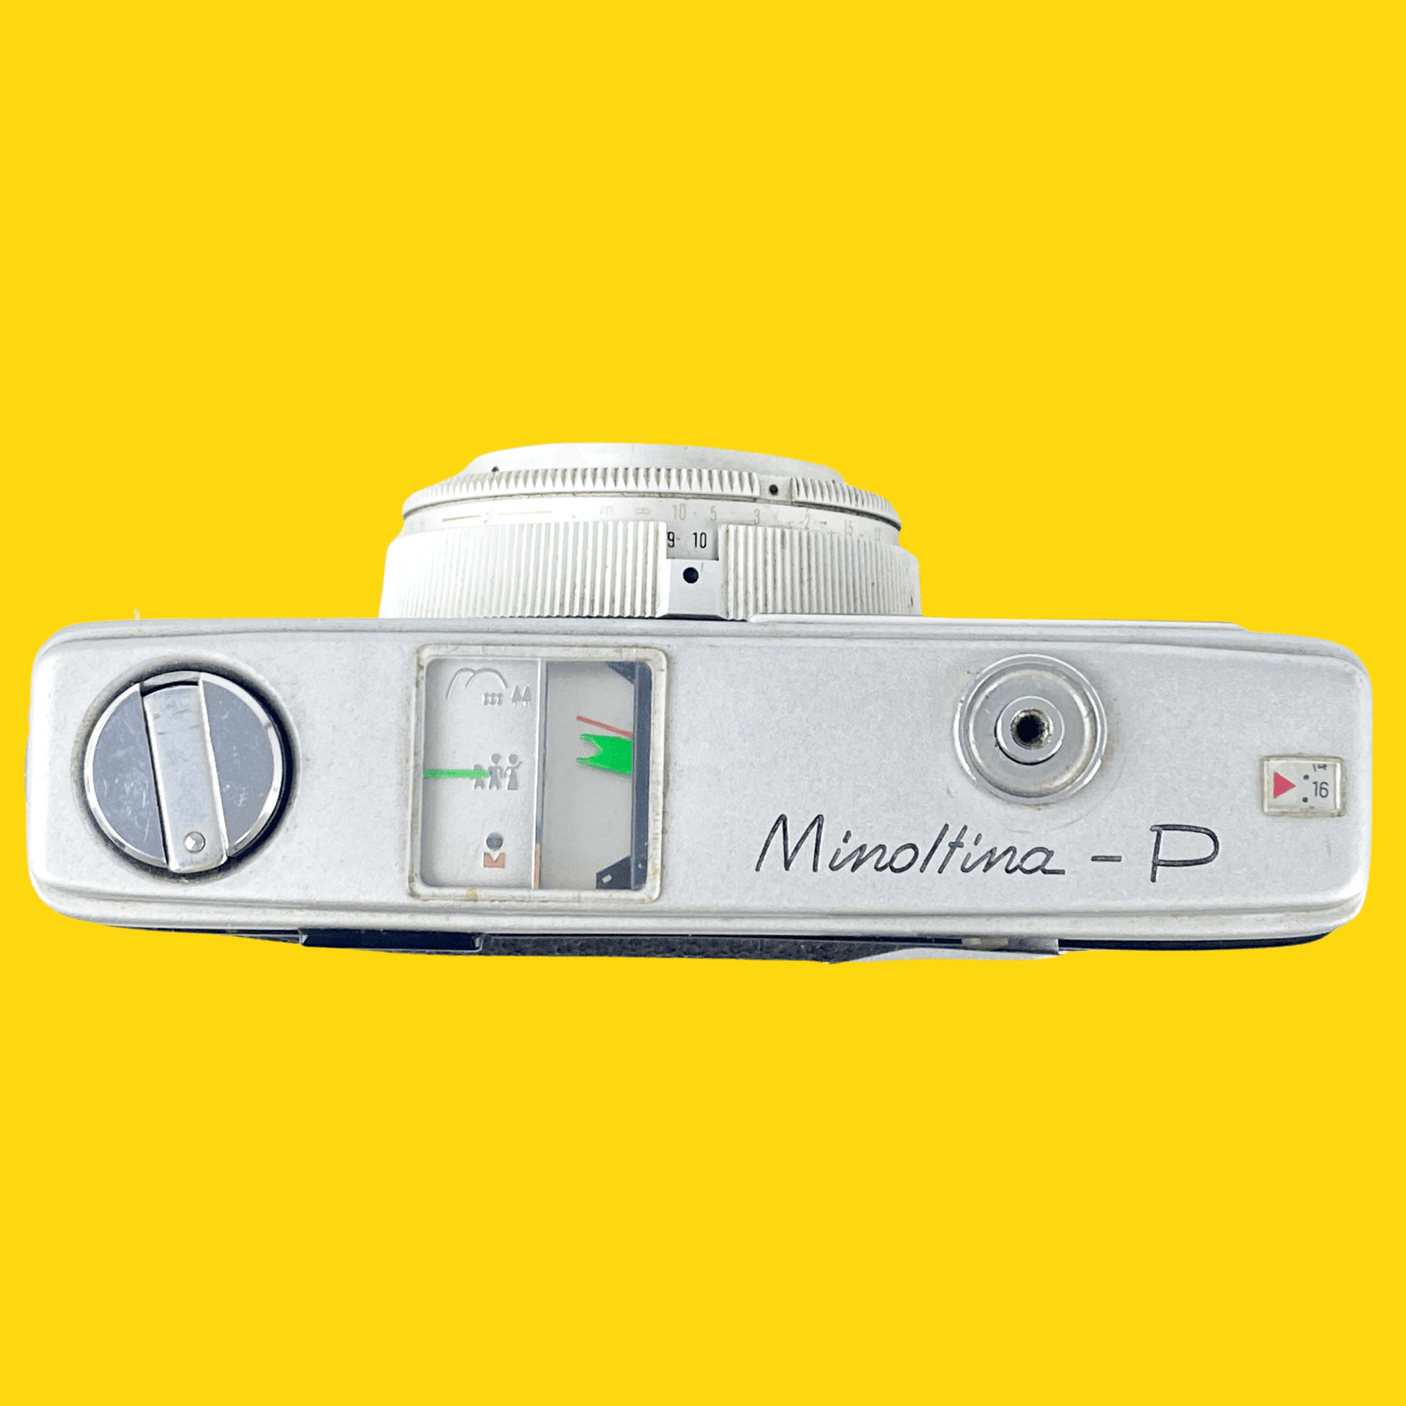 Minolta Minoltina P 35mm Film Camera Point and Shoot